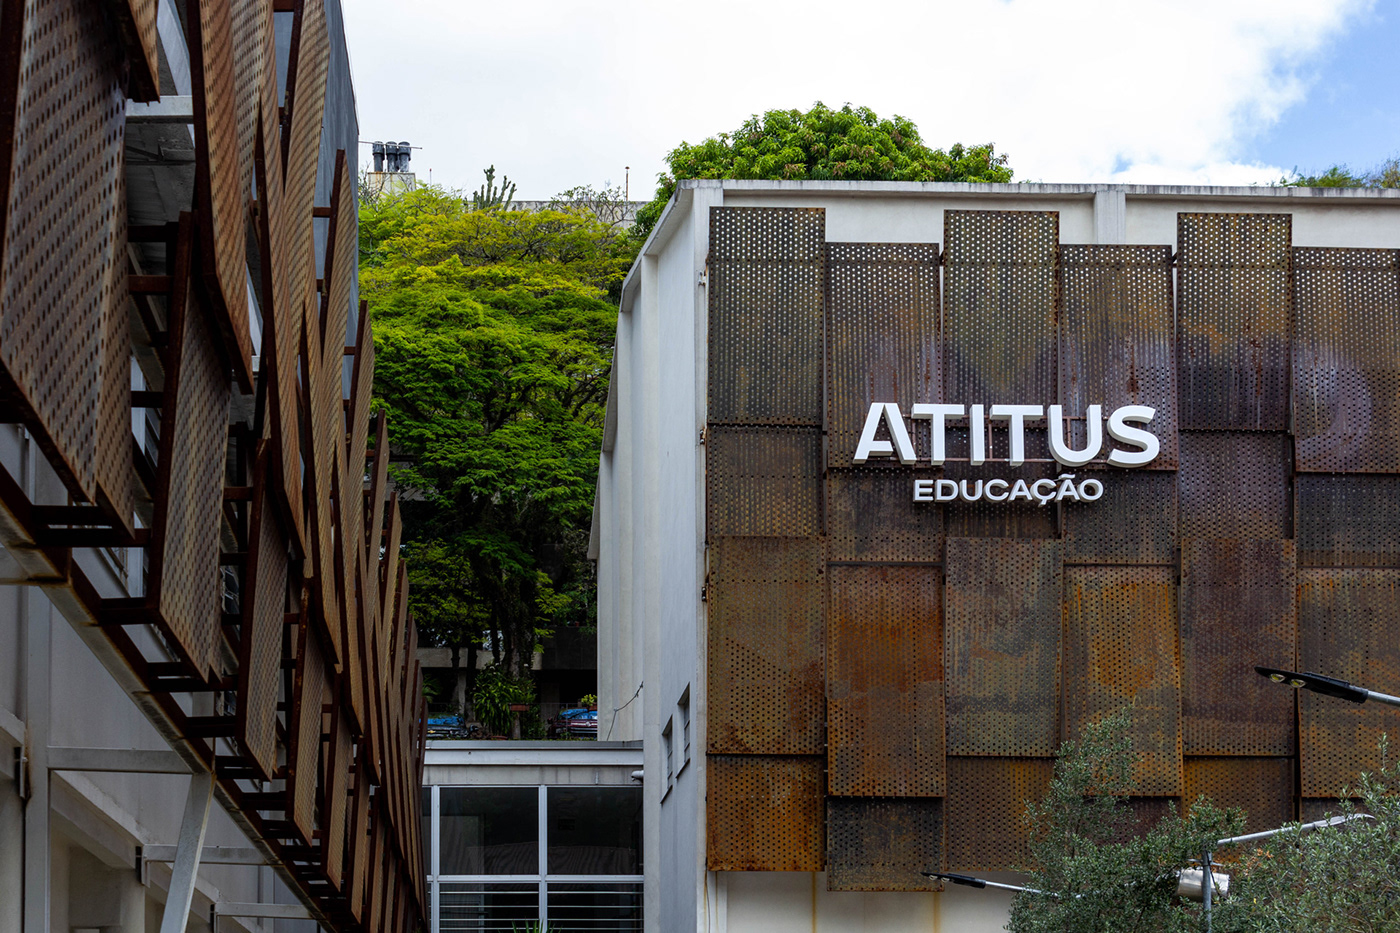 Atitus college Education identity motion graphics  University rebranding brand identity branding  visual identity